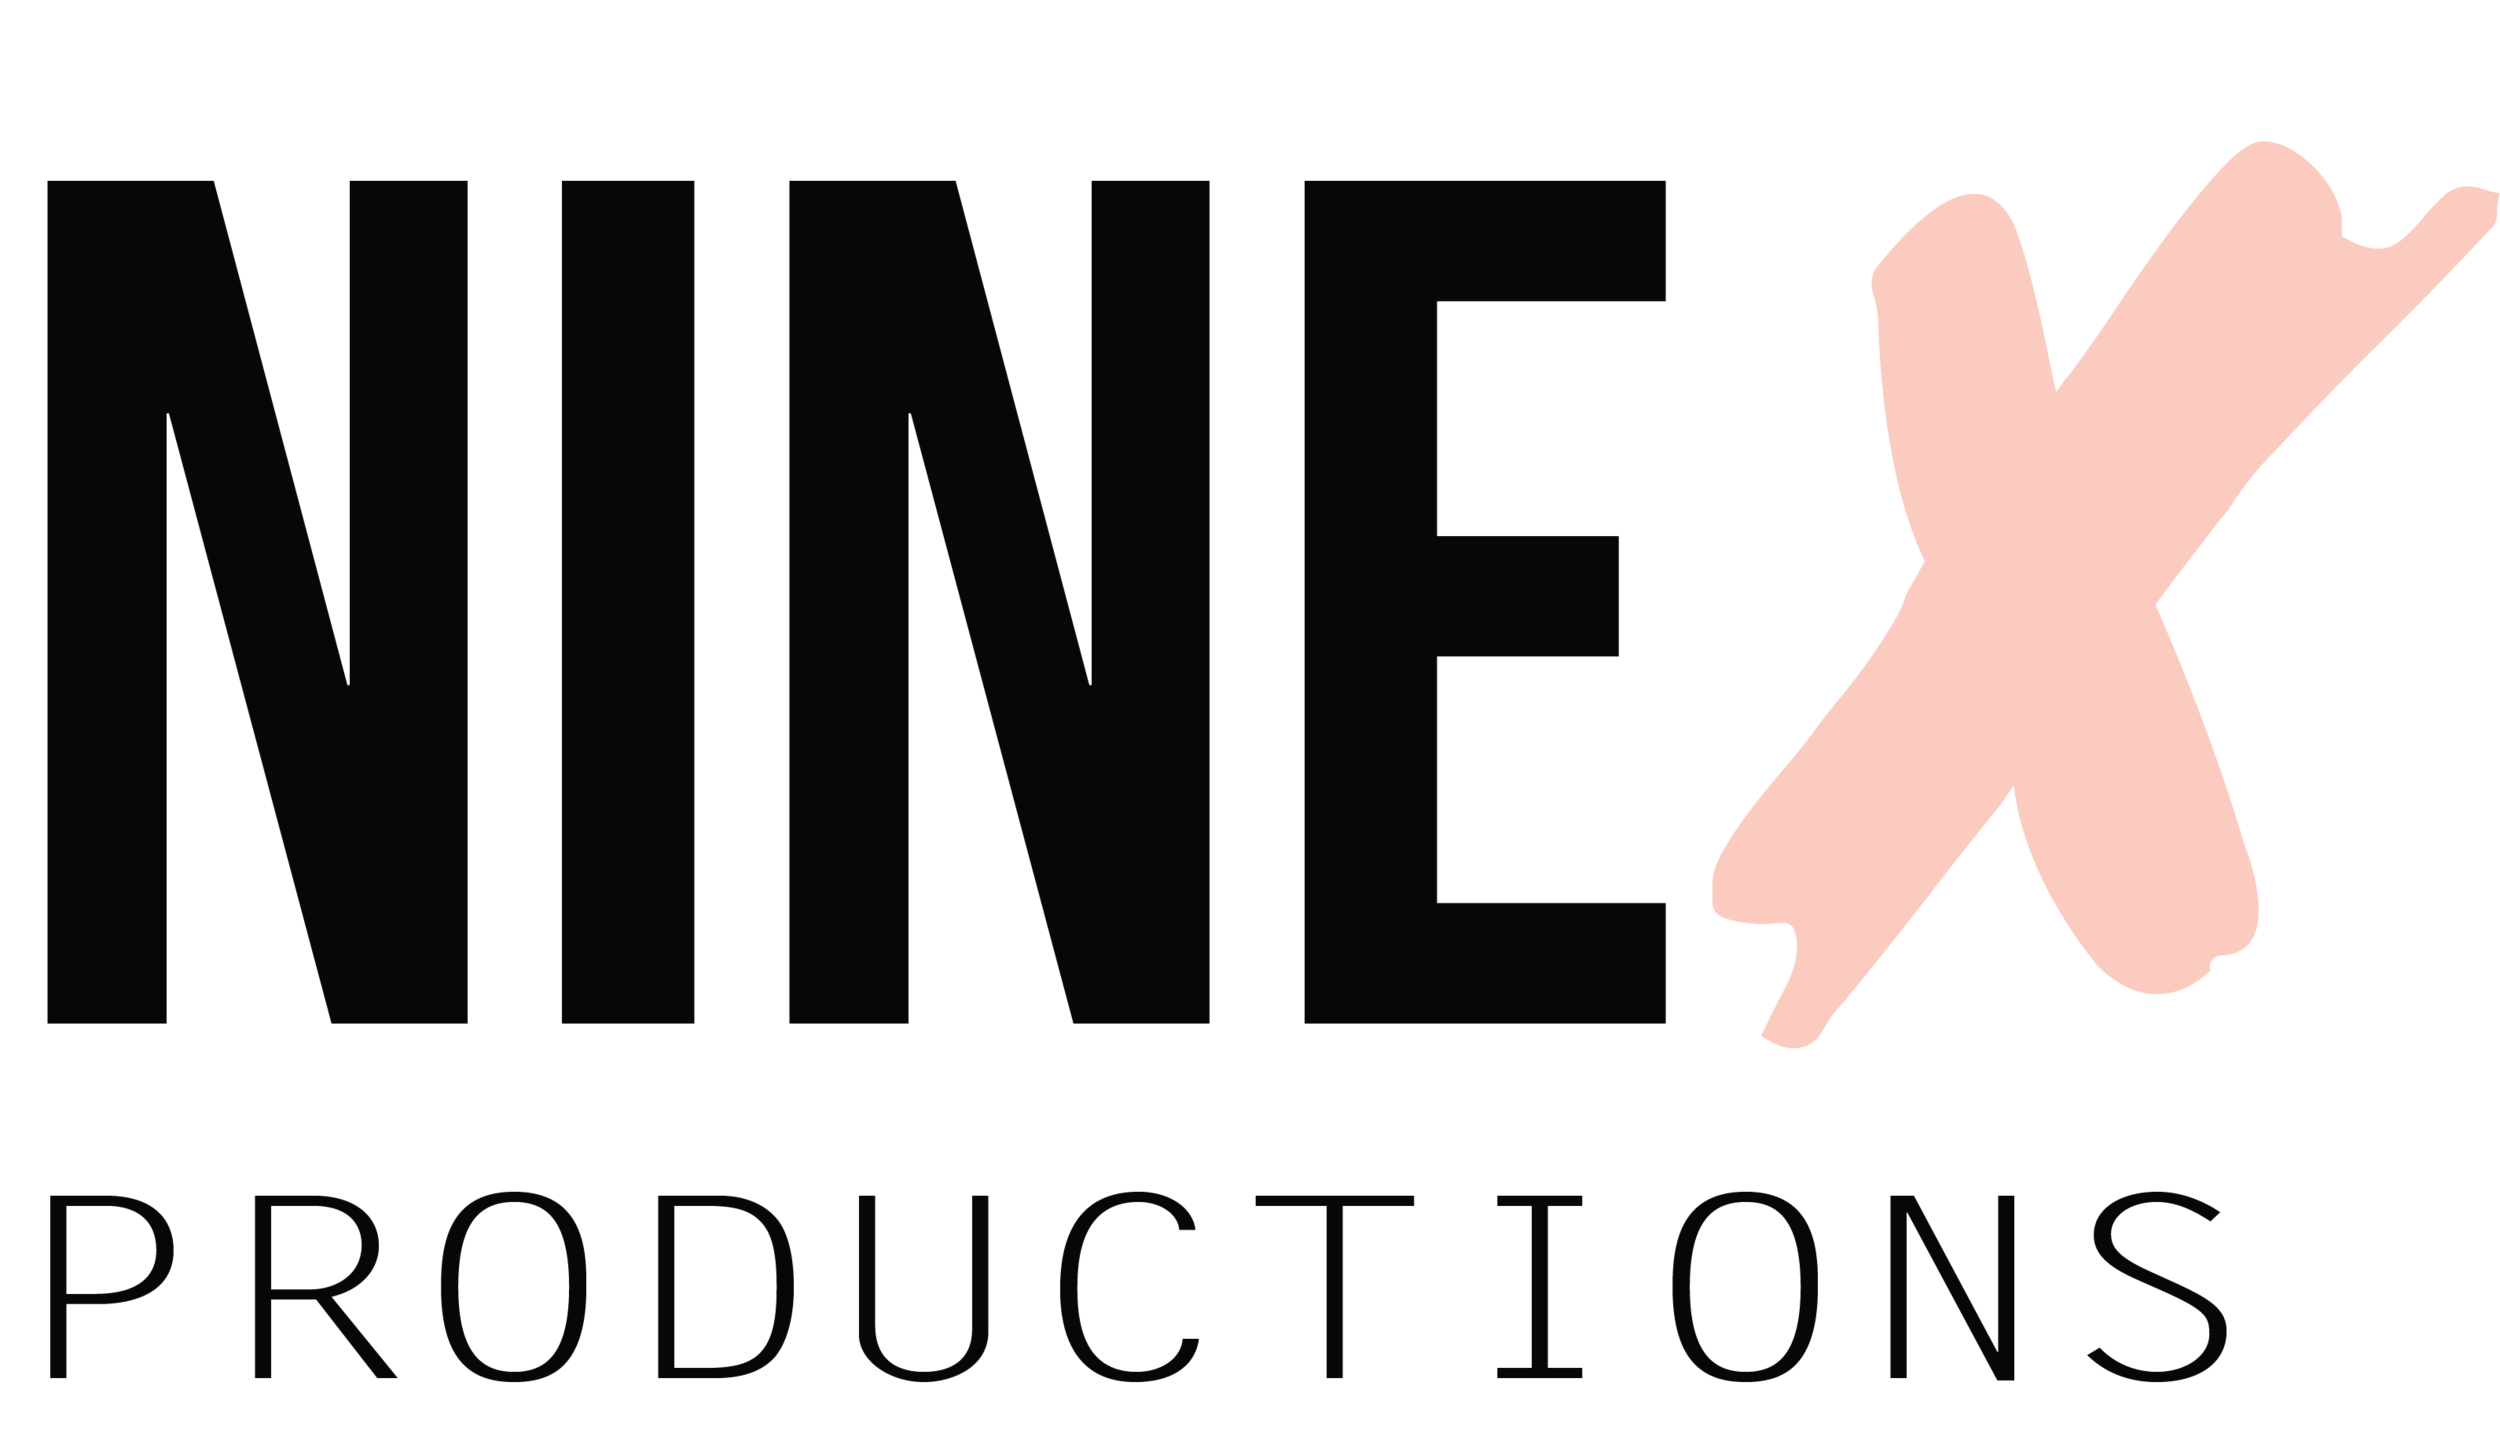 NineX Productions